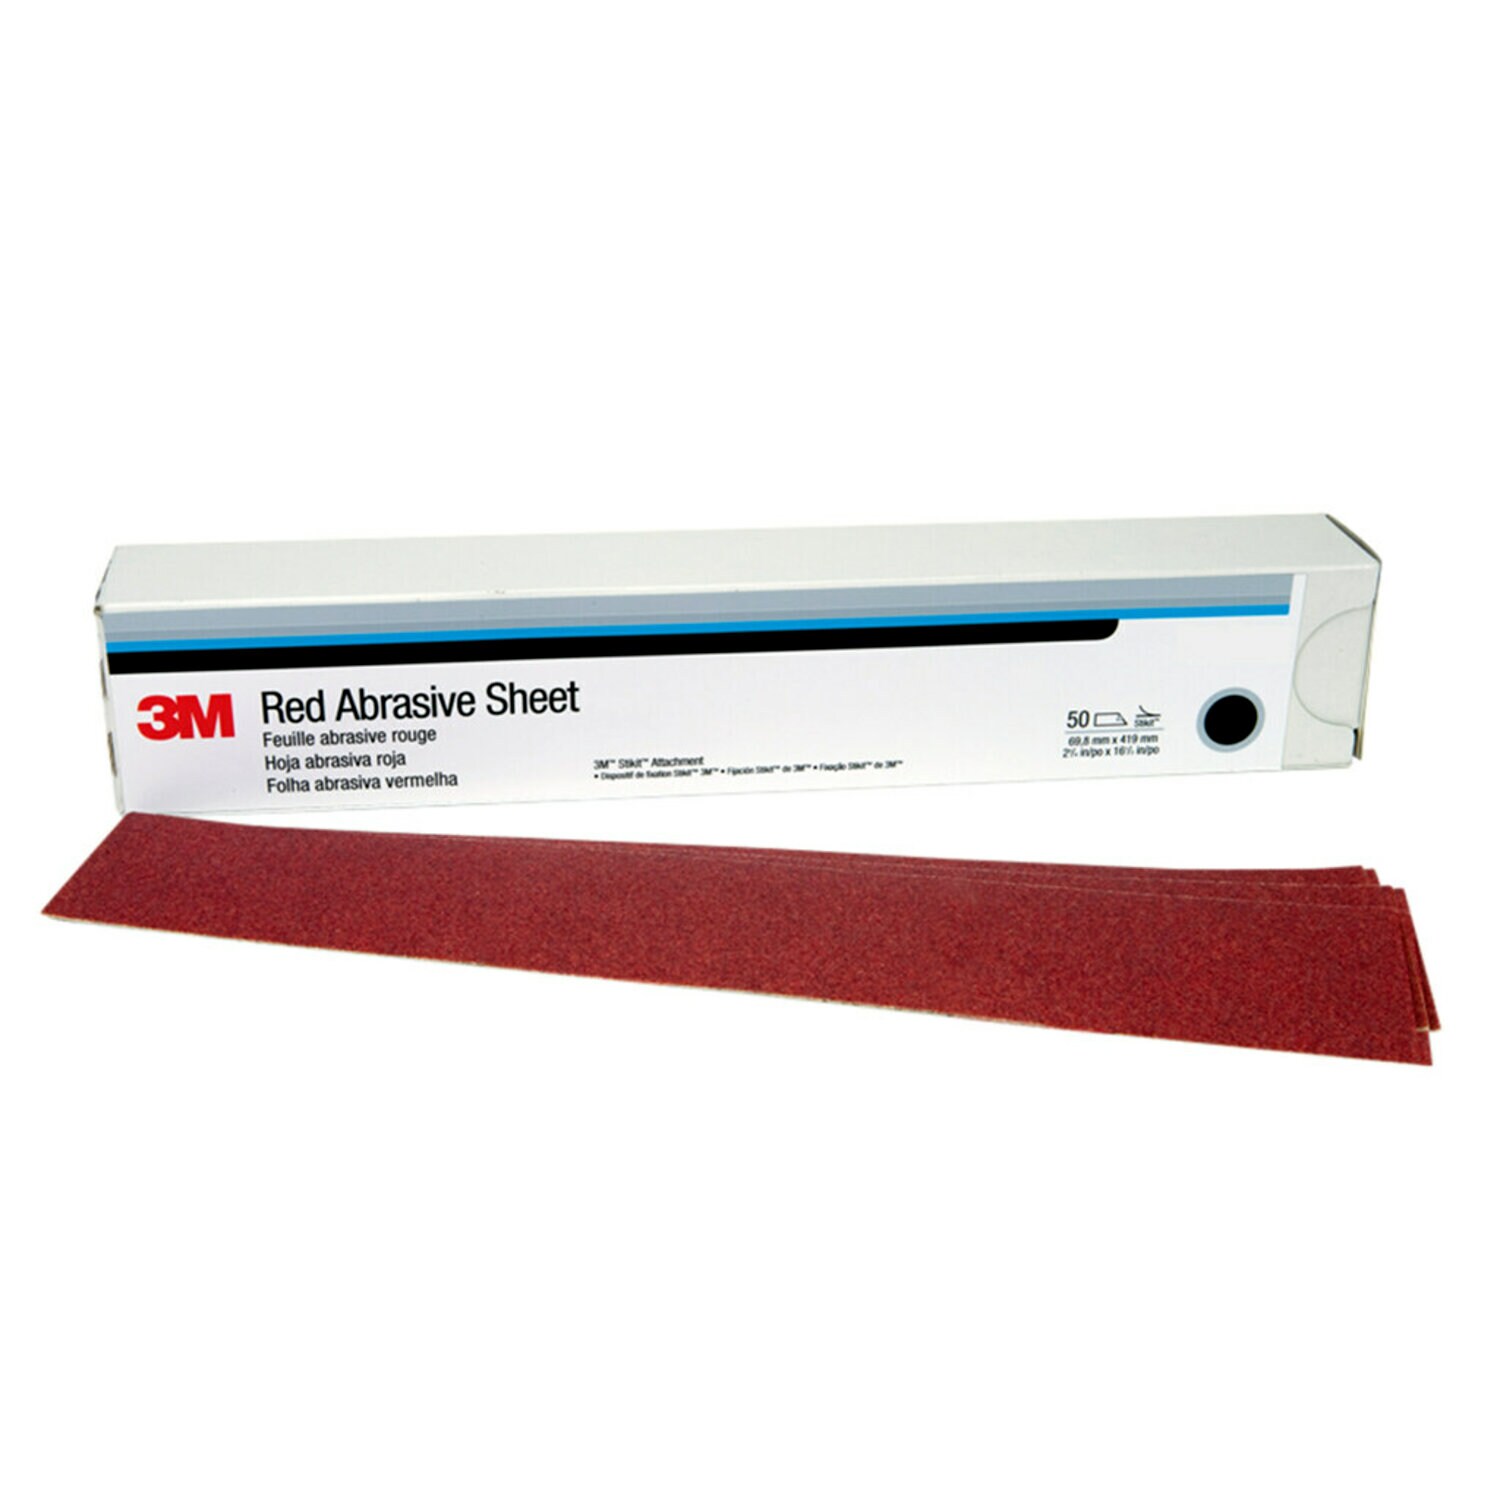 7000119798 - 3M Hookit Red Abrasive Sheet, 01180, P150, 2-3/4 in x 16 1/2 in, 25
sheets per carton, 5 cartons per case